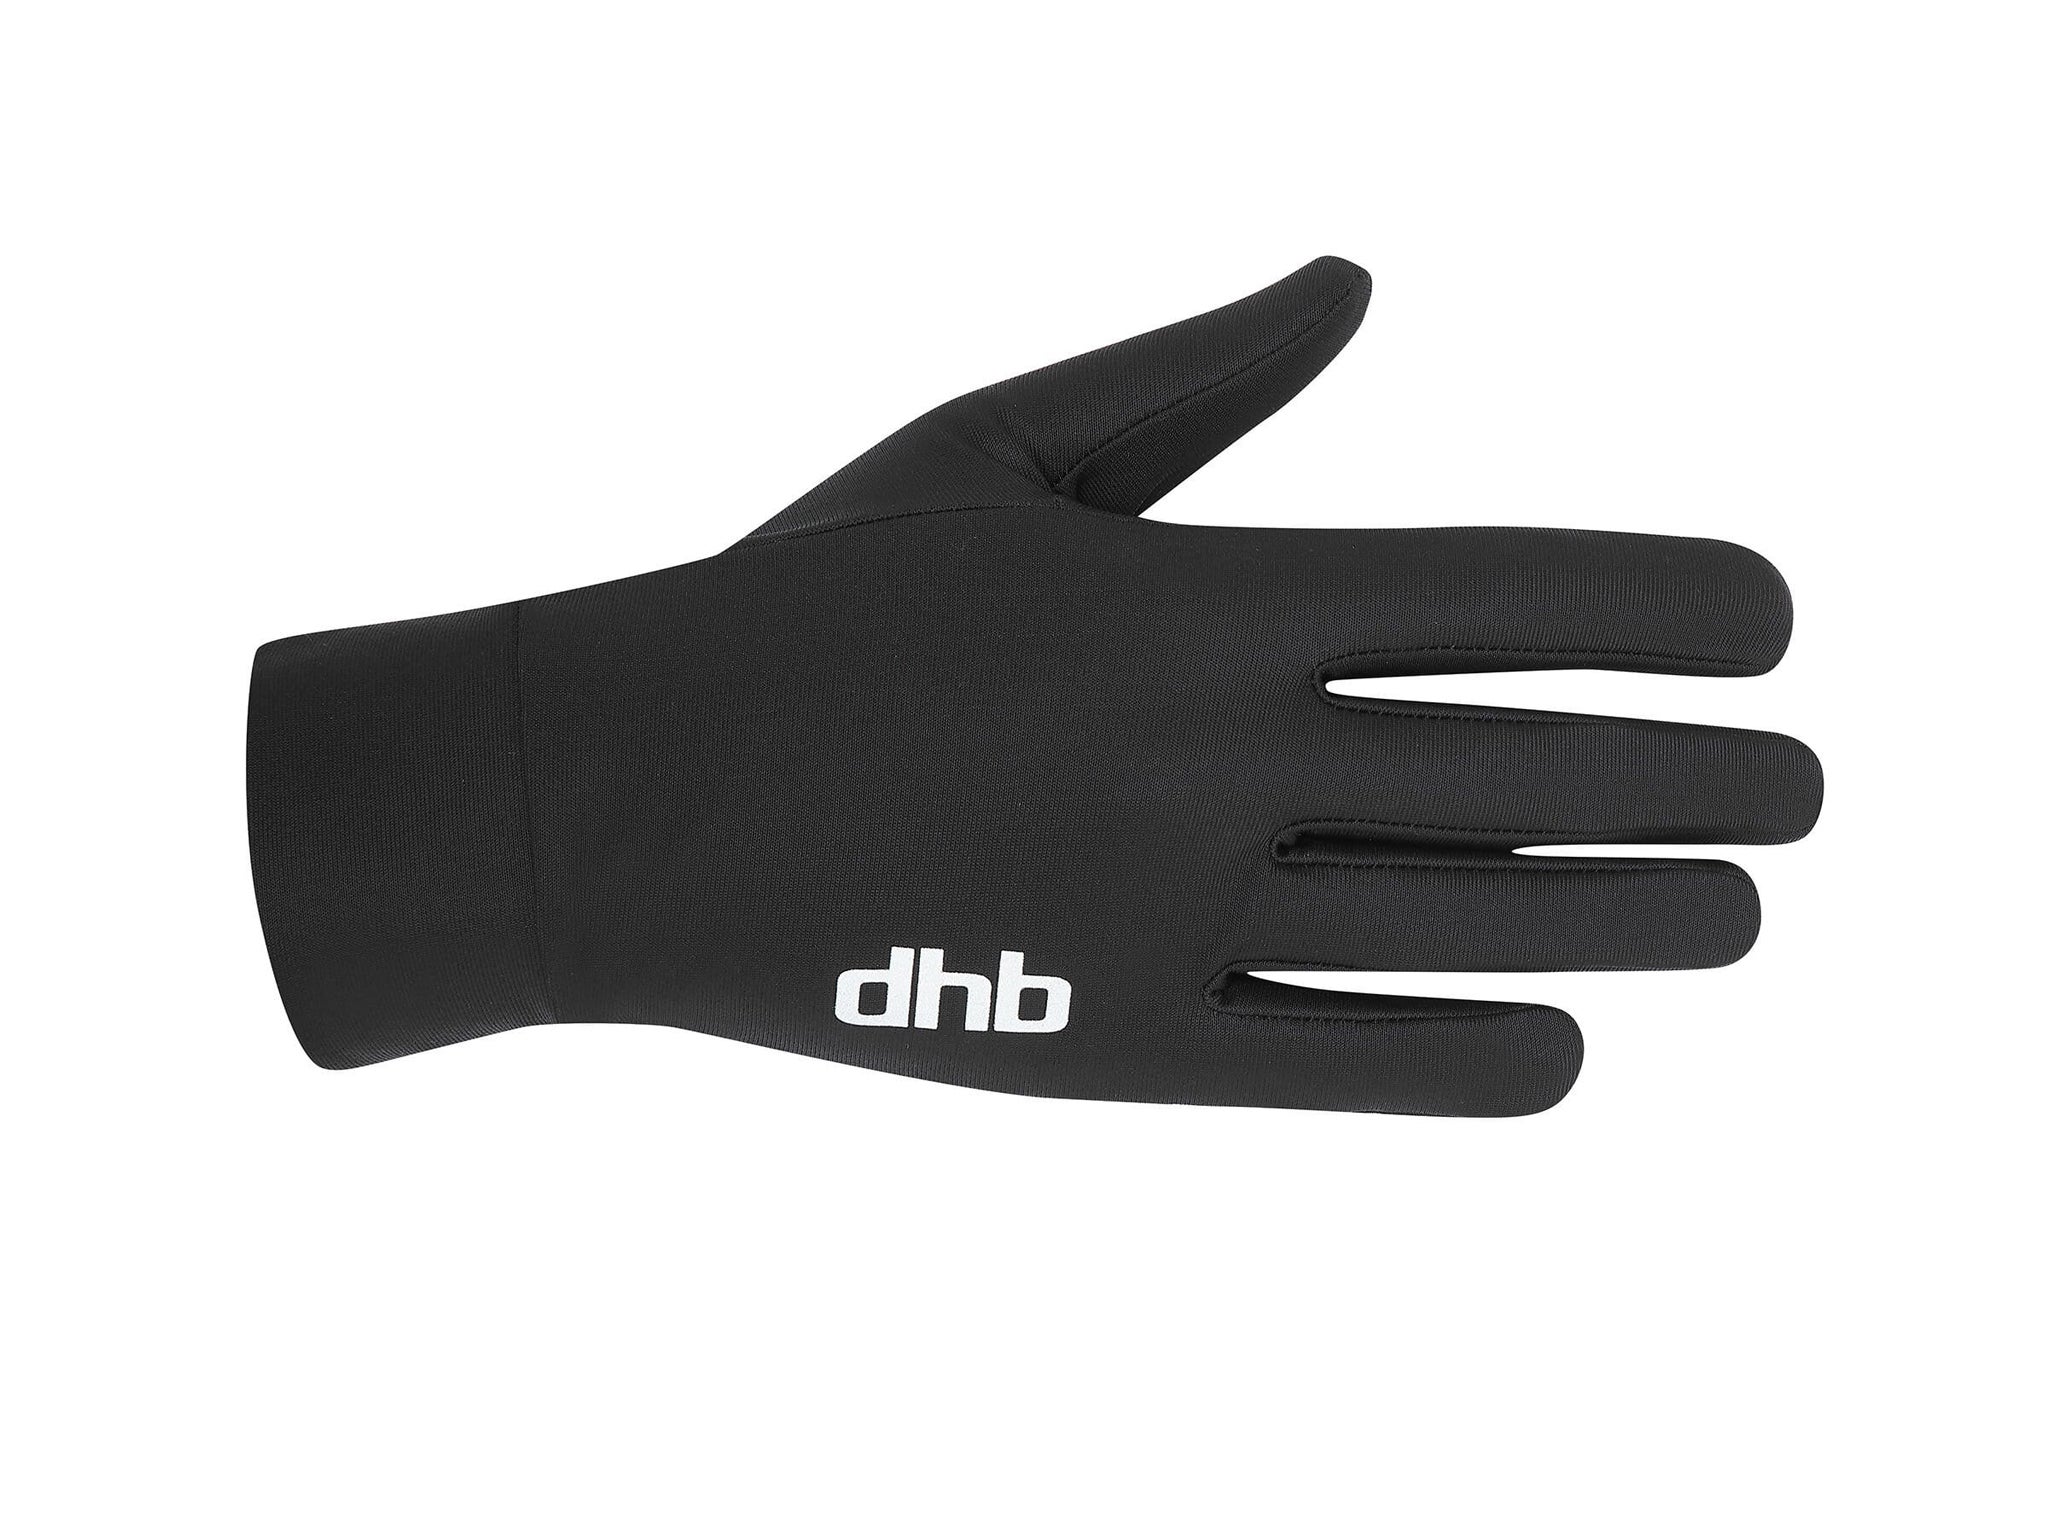 dhb_Glove_Black_1.jpg